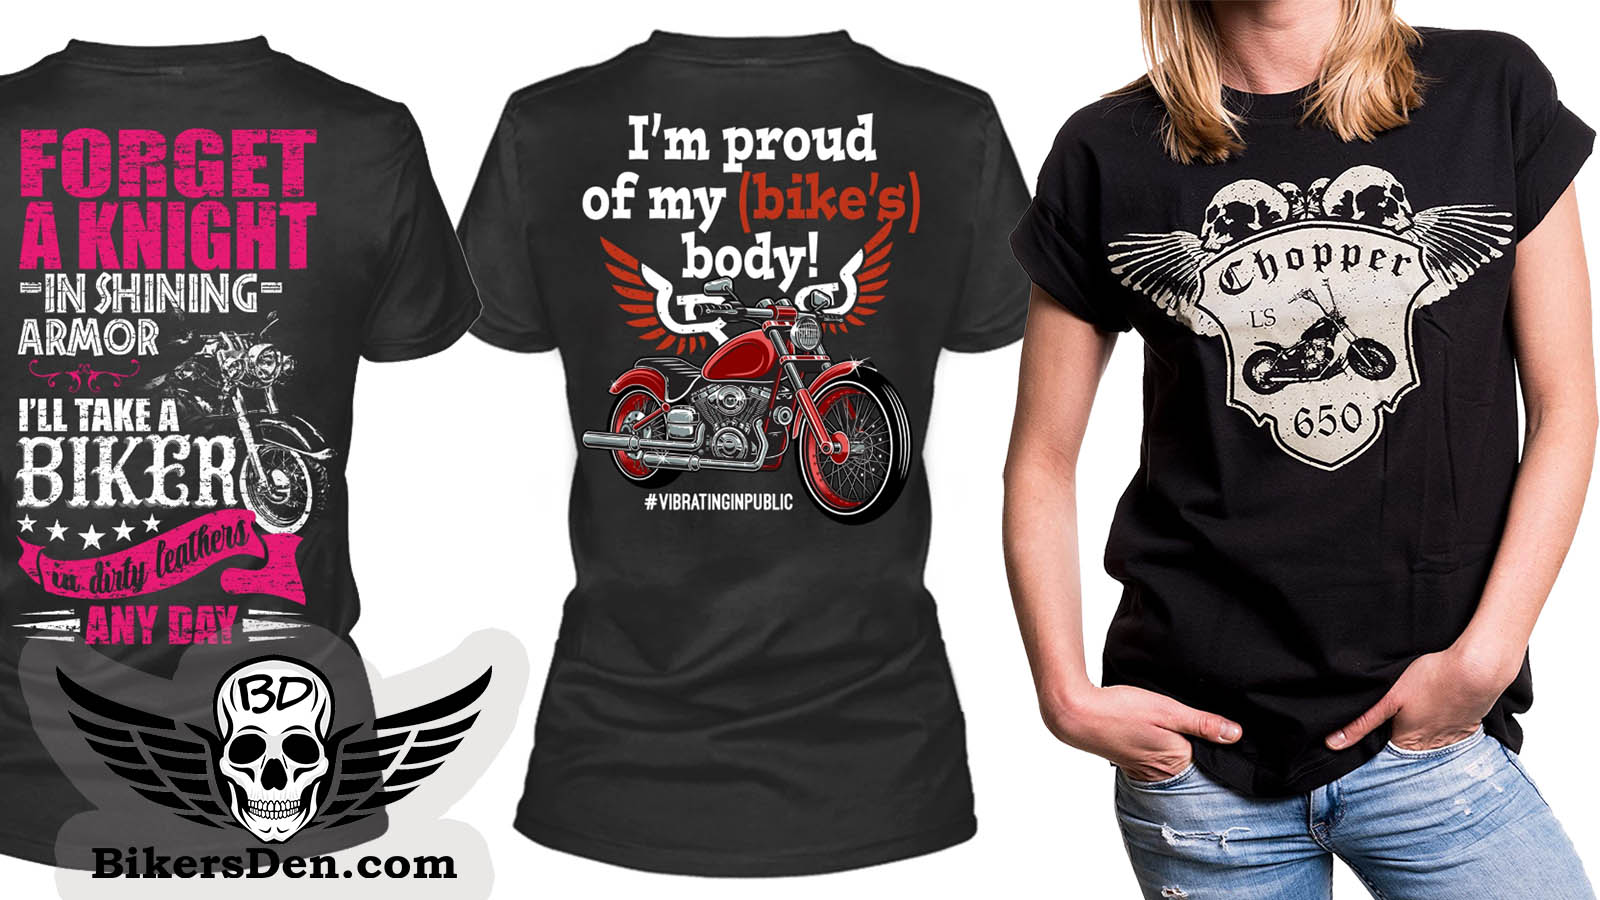 Women's Motorcycle & T-Shirts - The Bikers' Den